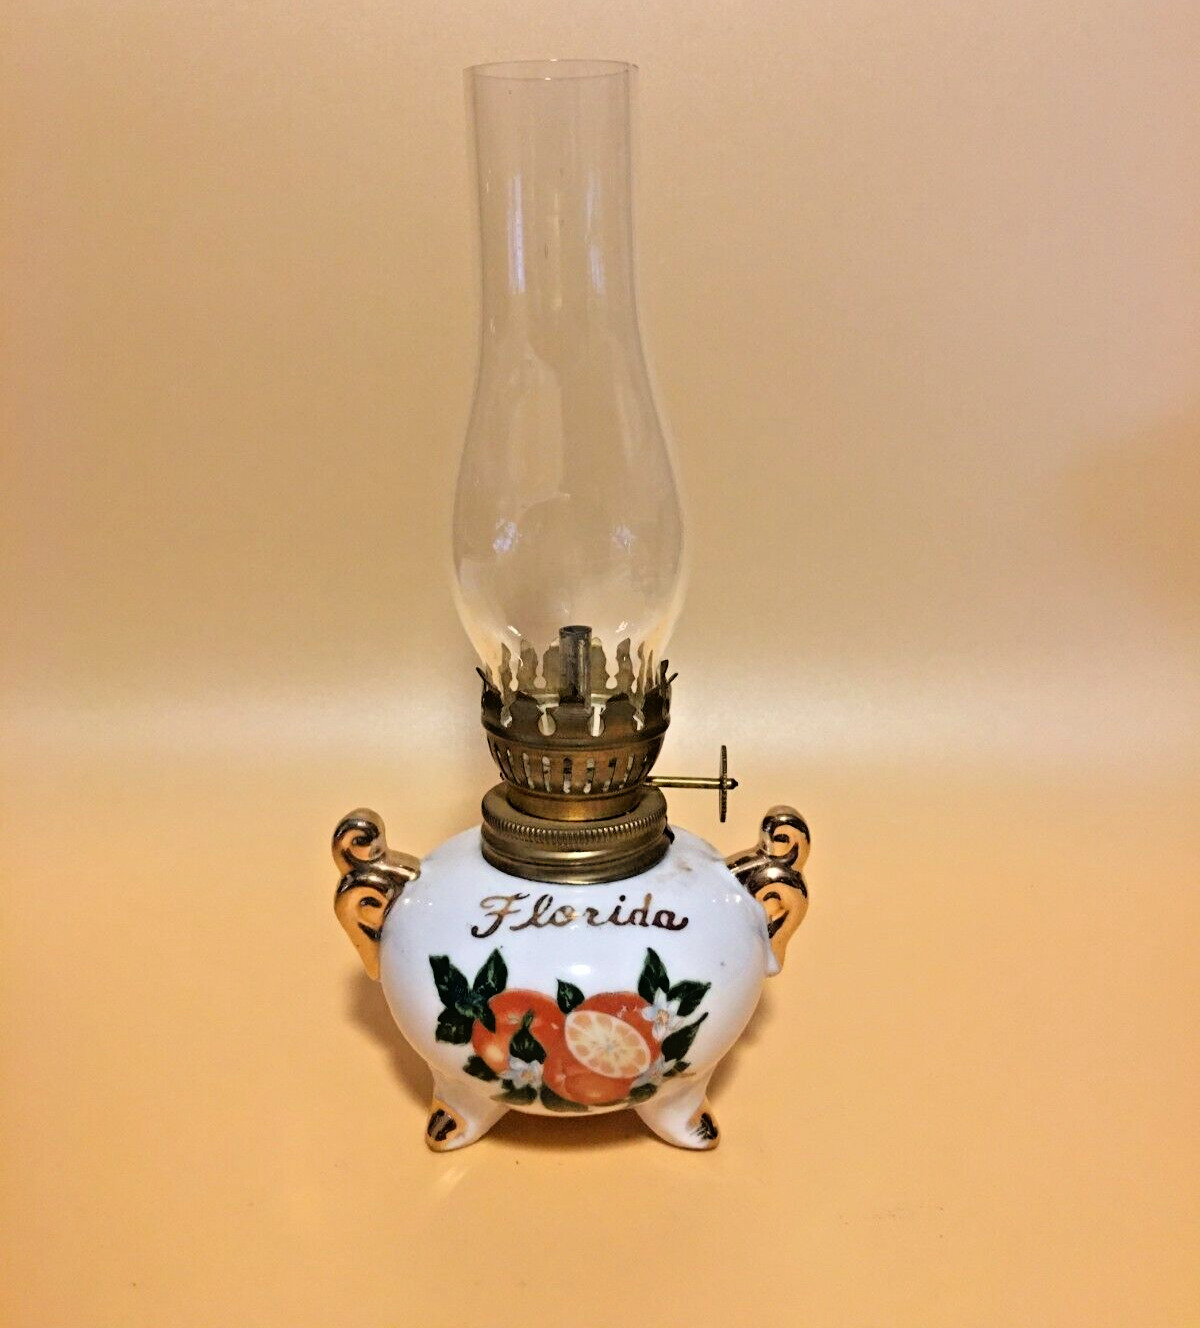 Vintage Porcelain Miniature Oil Kerosene Lamp FLORIDA in Gold Letters & Oranges